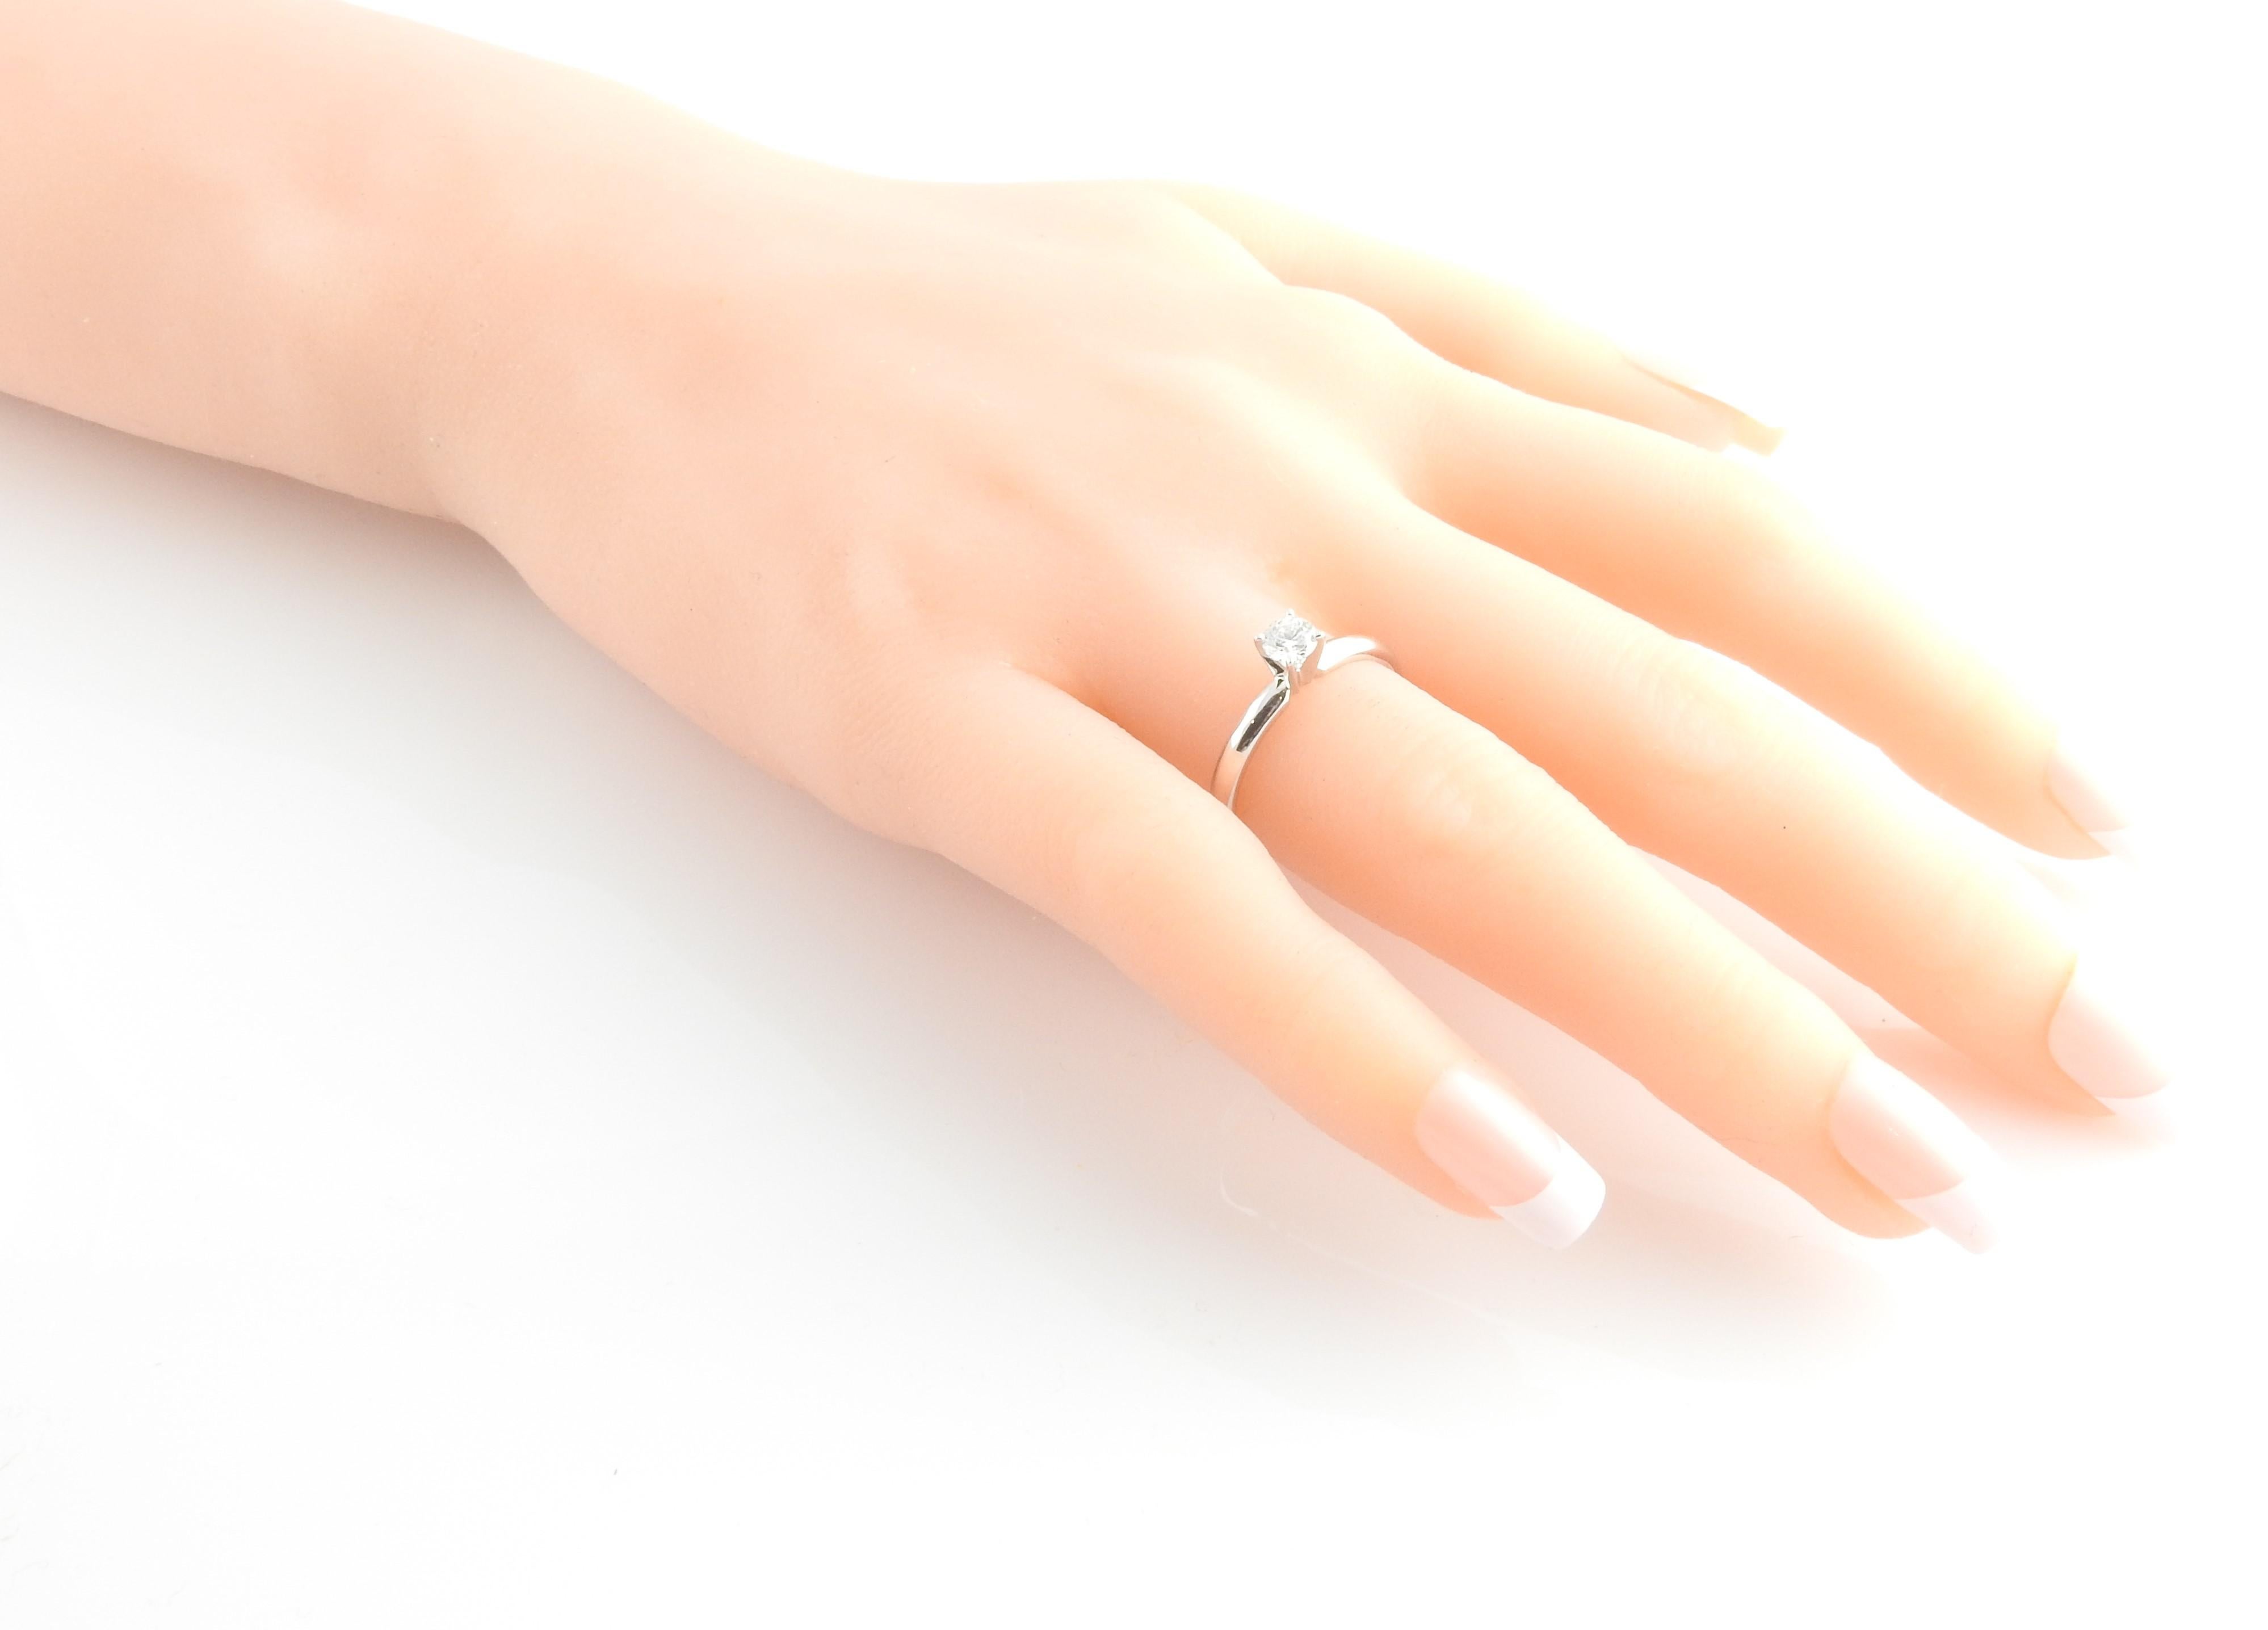 14 Karat White Gold Diamond Engagement Ring For Sale 3